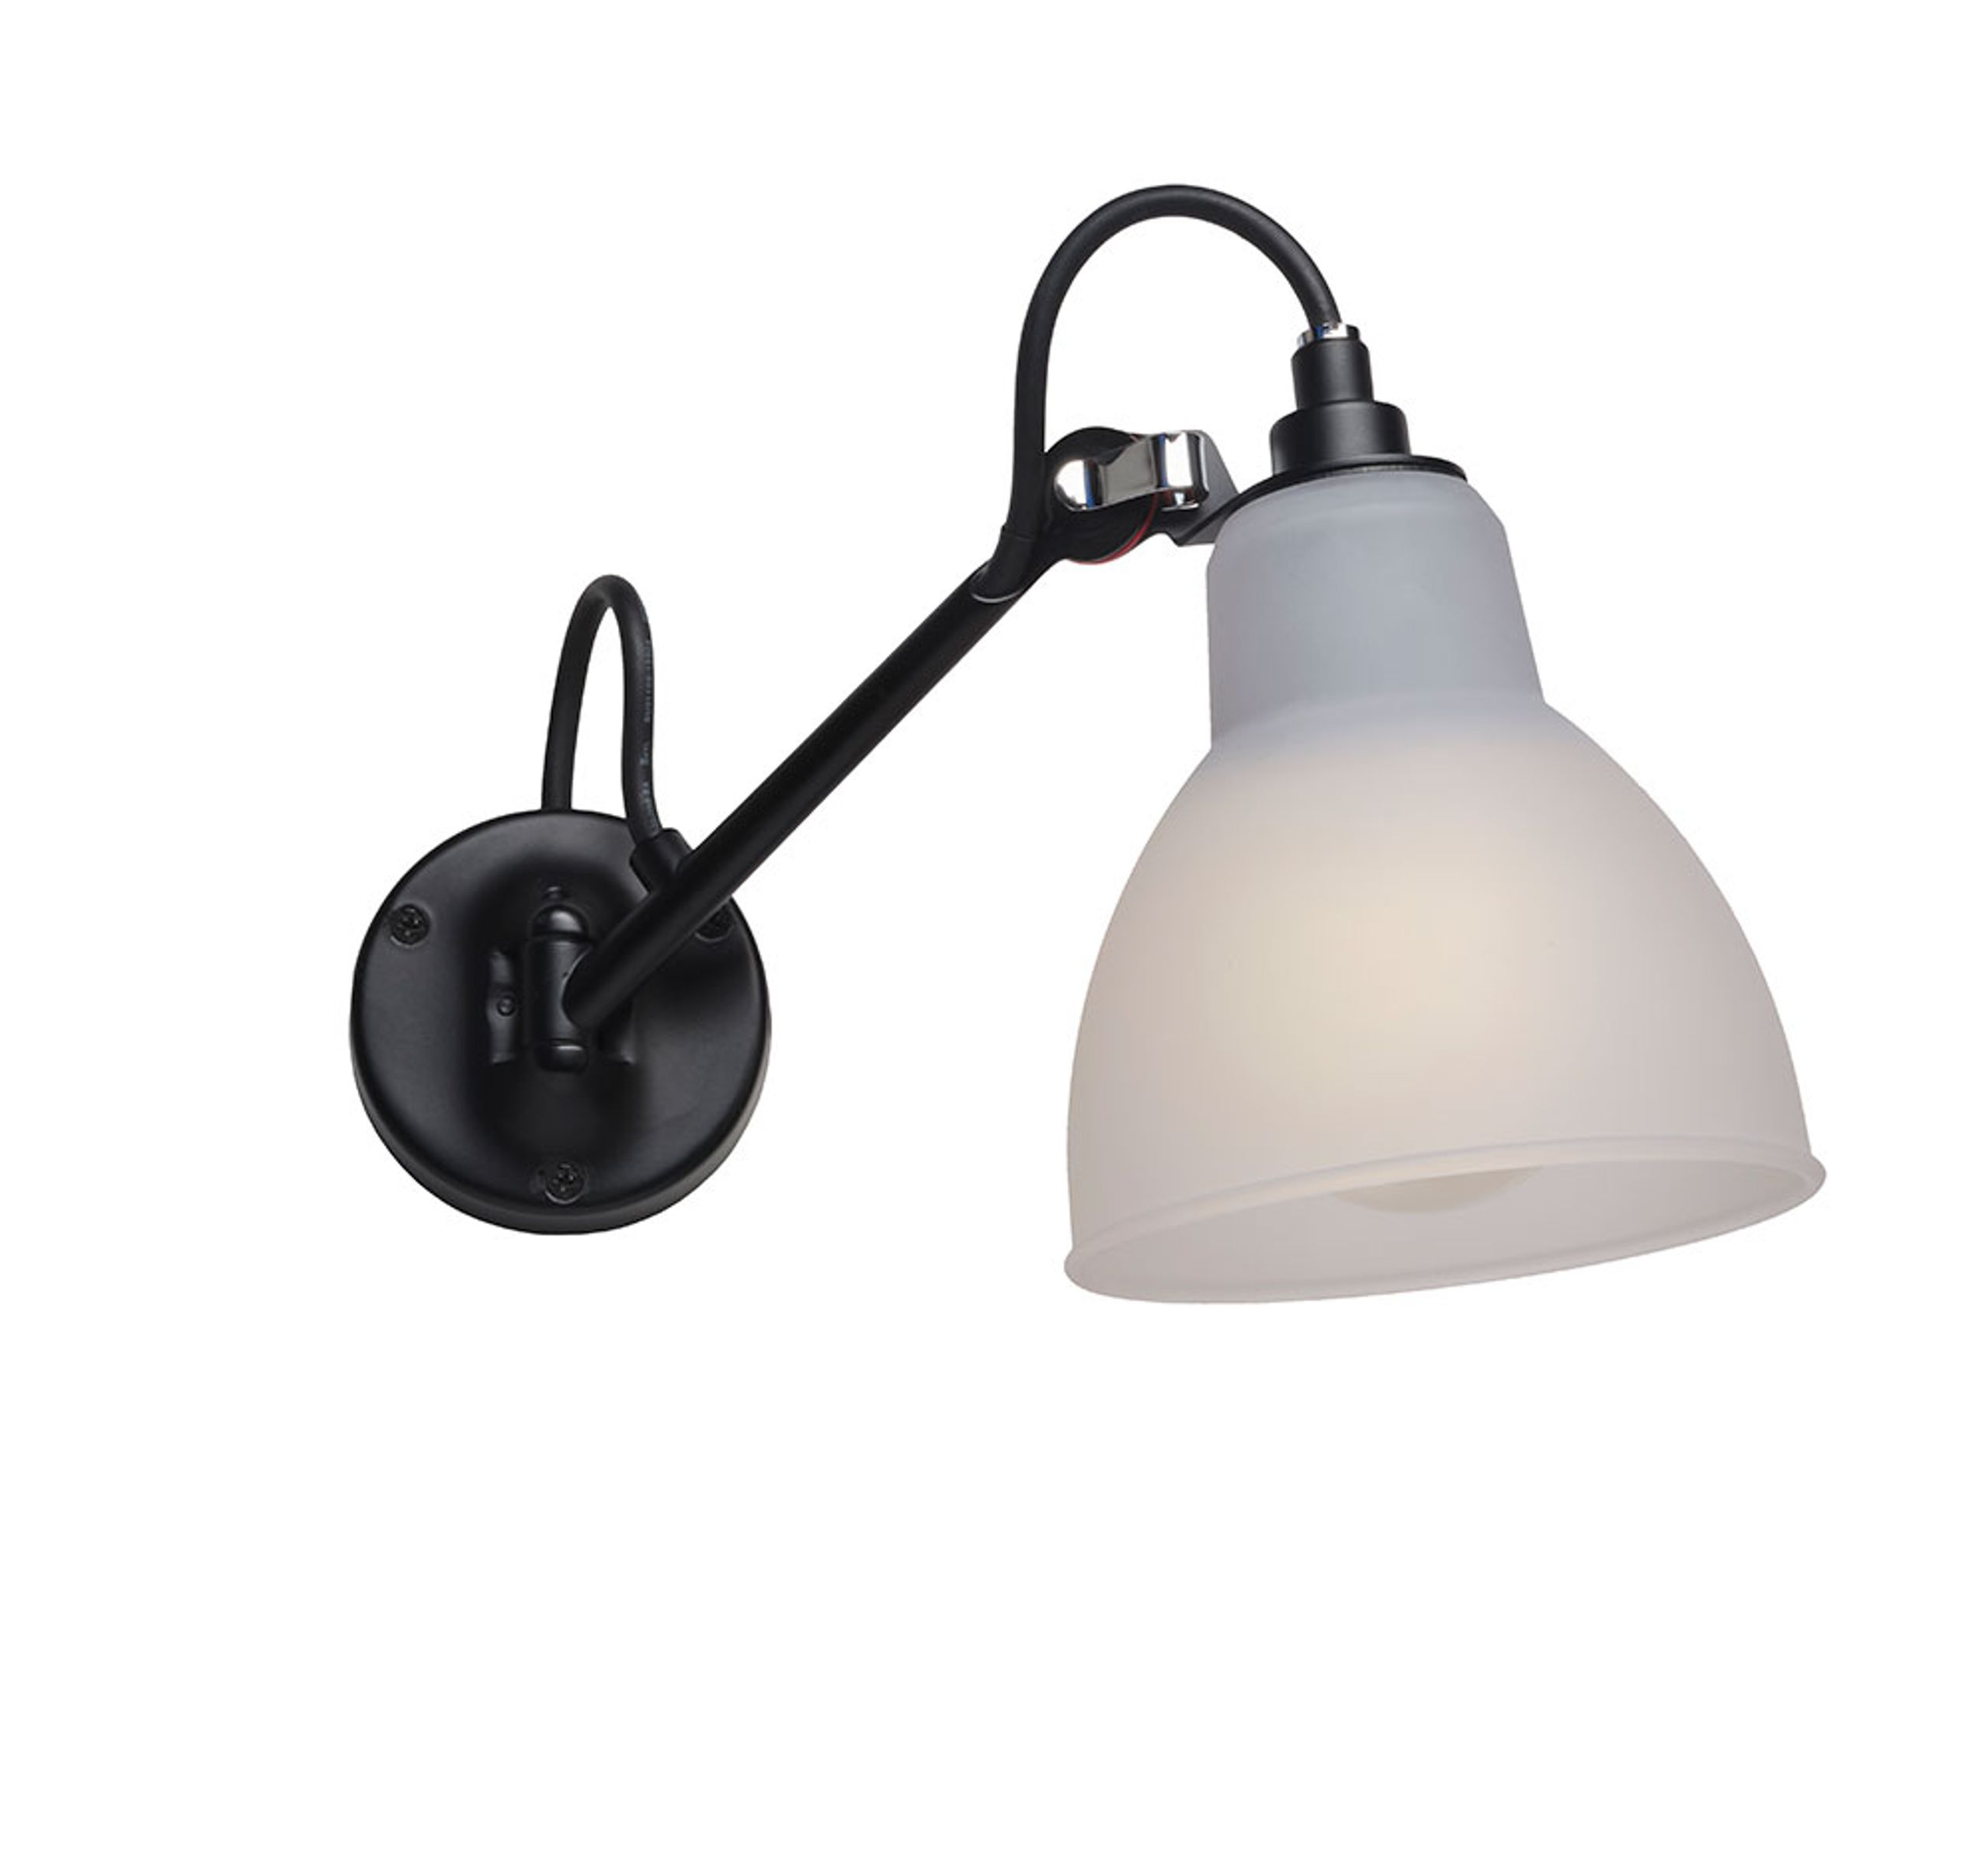 DCW - Lamp - Lampe Gras N°104 BATHROOM - BL-PC